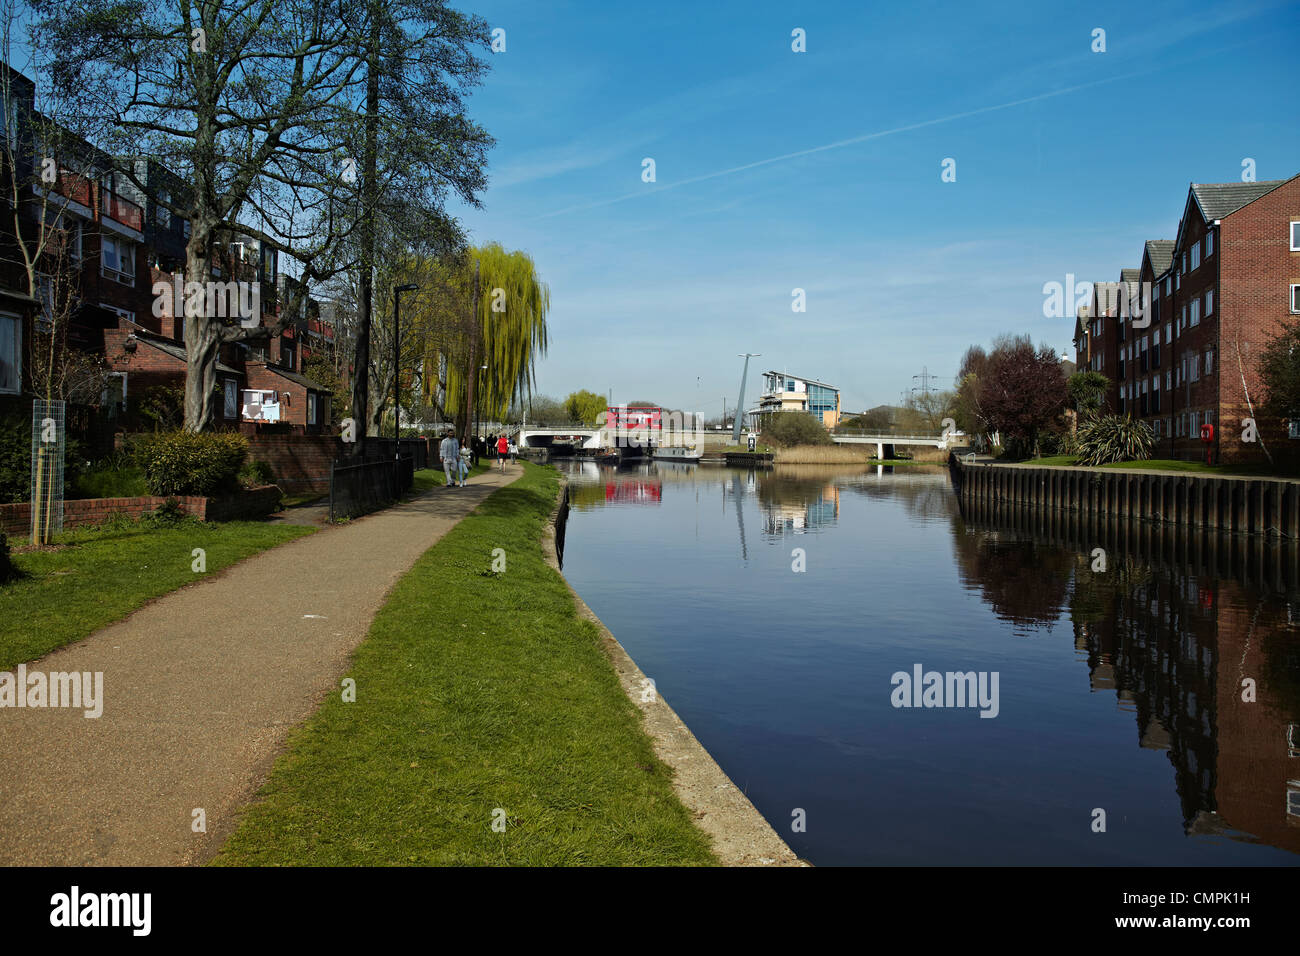 A canal scene near Tottenham London Stock Photo